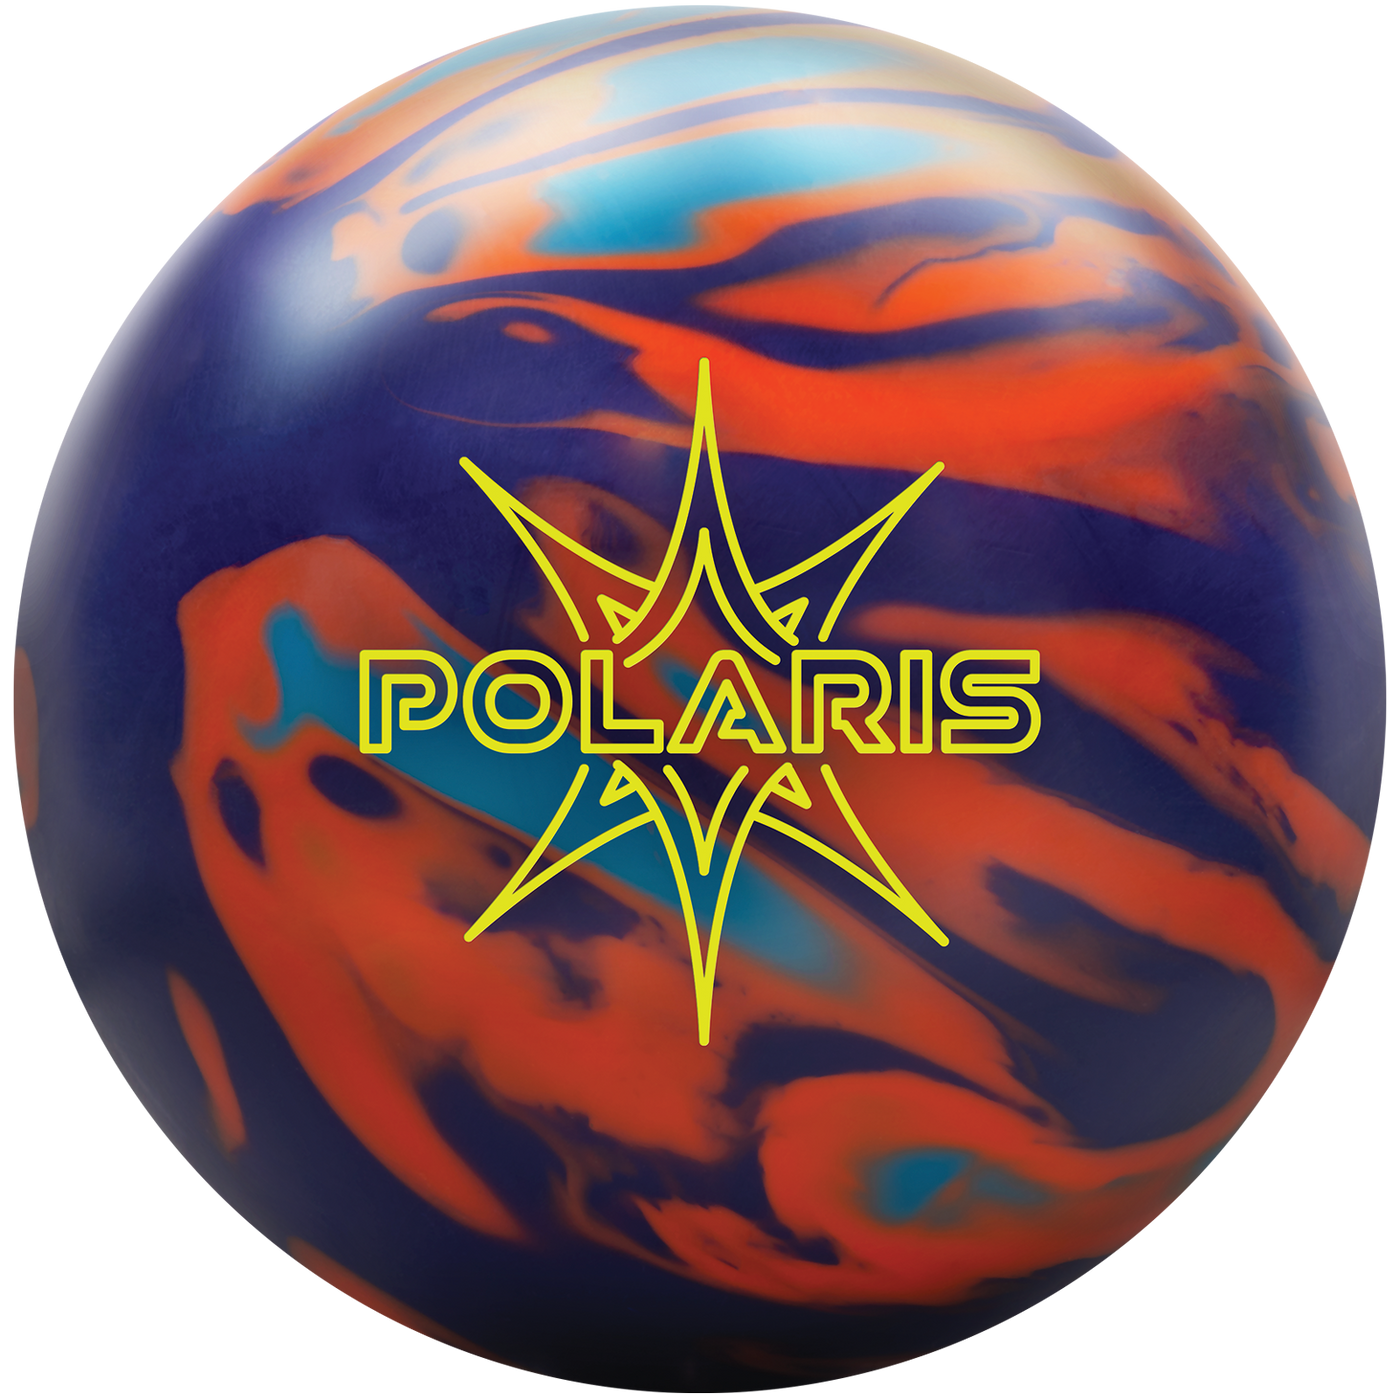 Polaris Bowling Ball